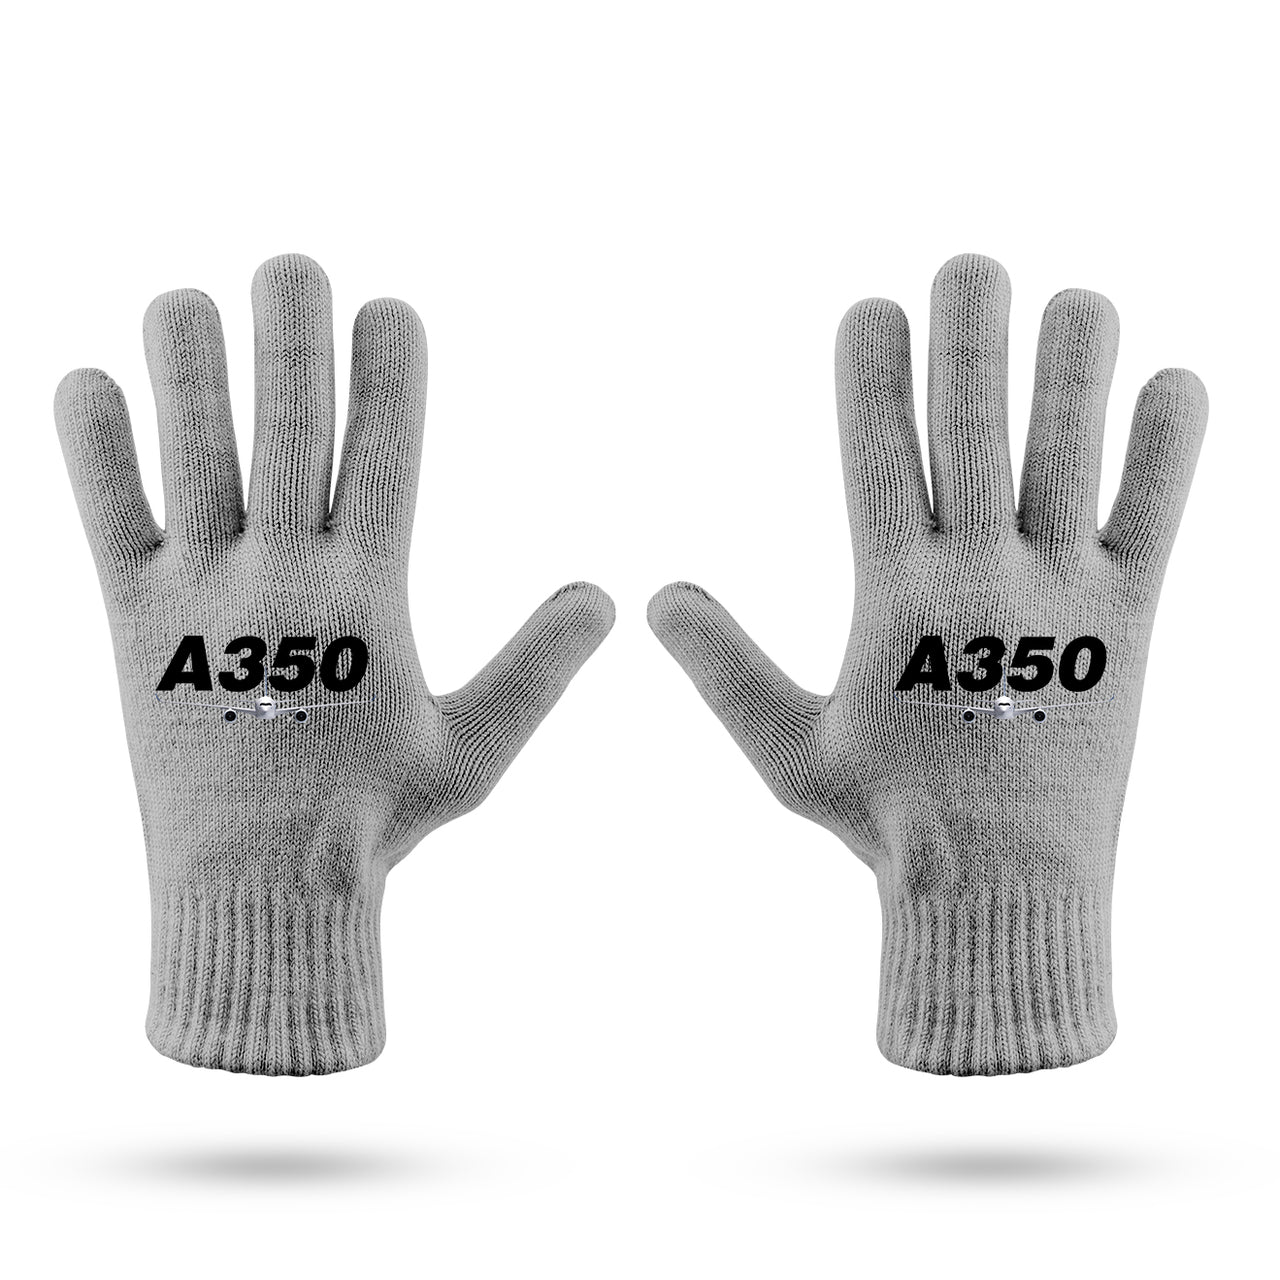 Super Airbus A350 Designed Gloves